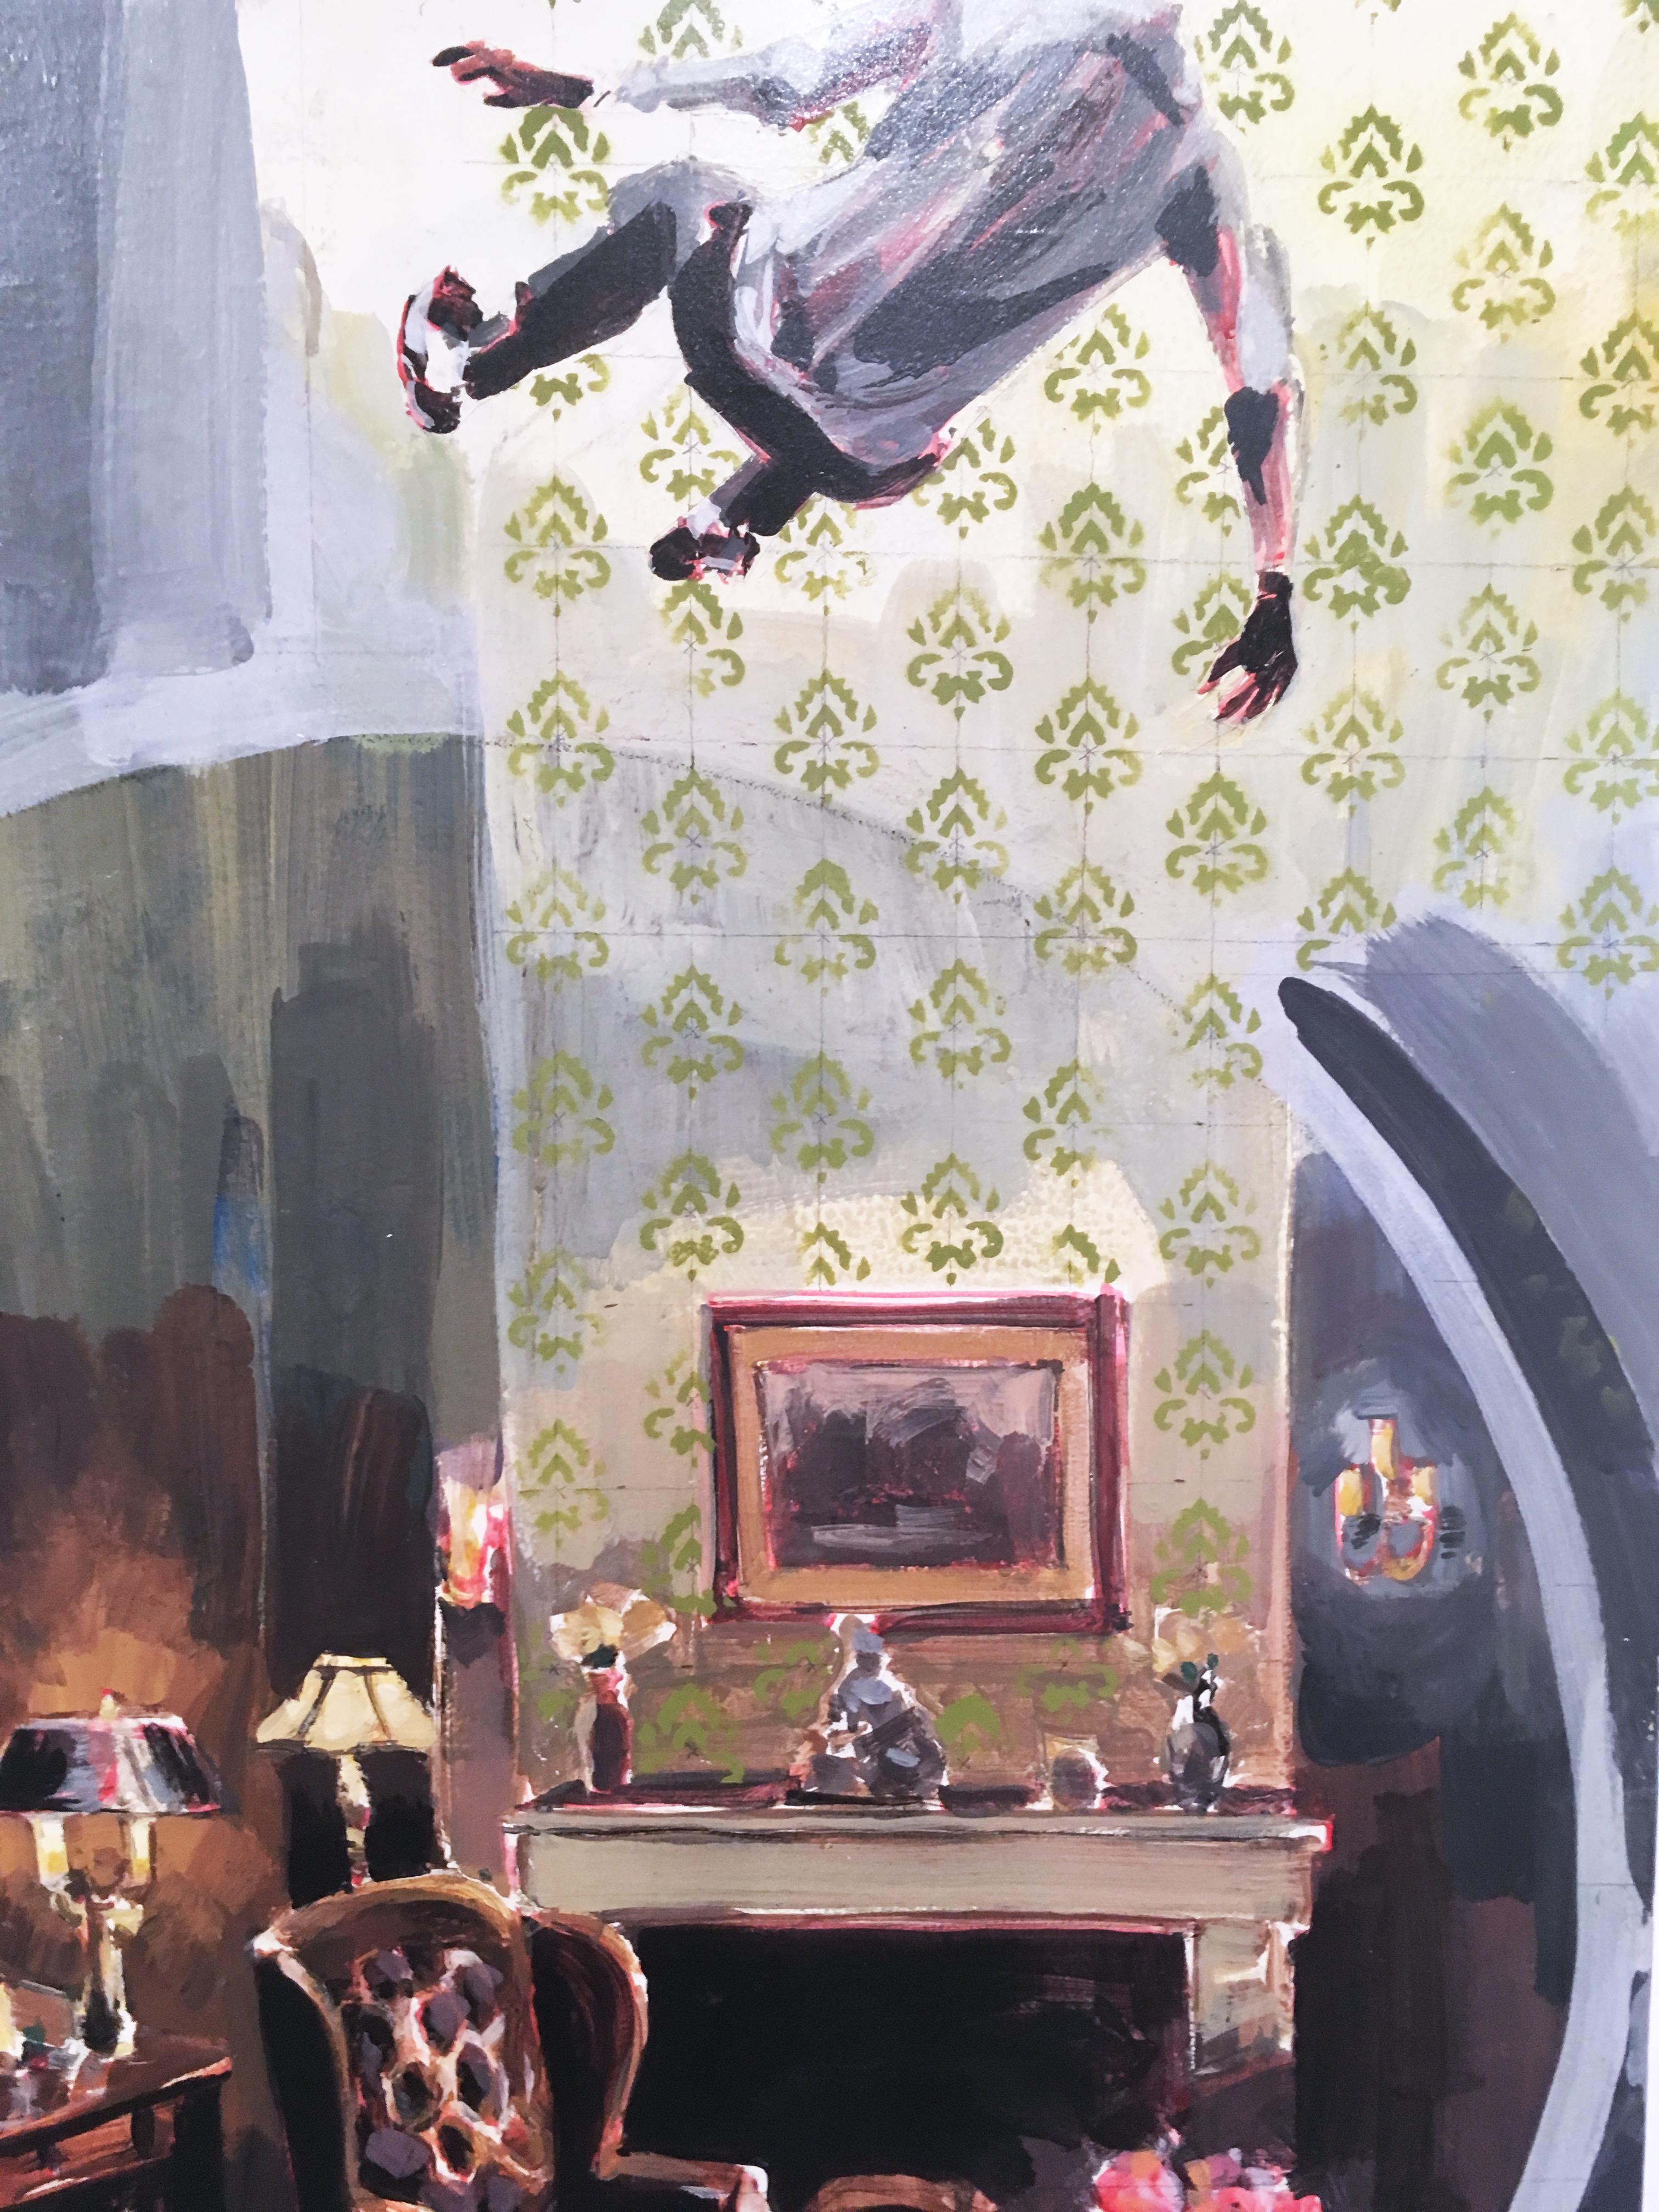 Falling Into It, 2017, fisheye, living room, wallpaper, figurative, skateboarder.  Green, pink, blue. Acrylic on canvas